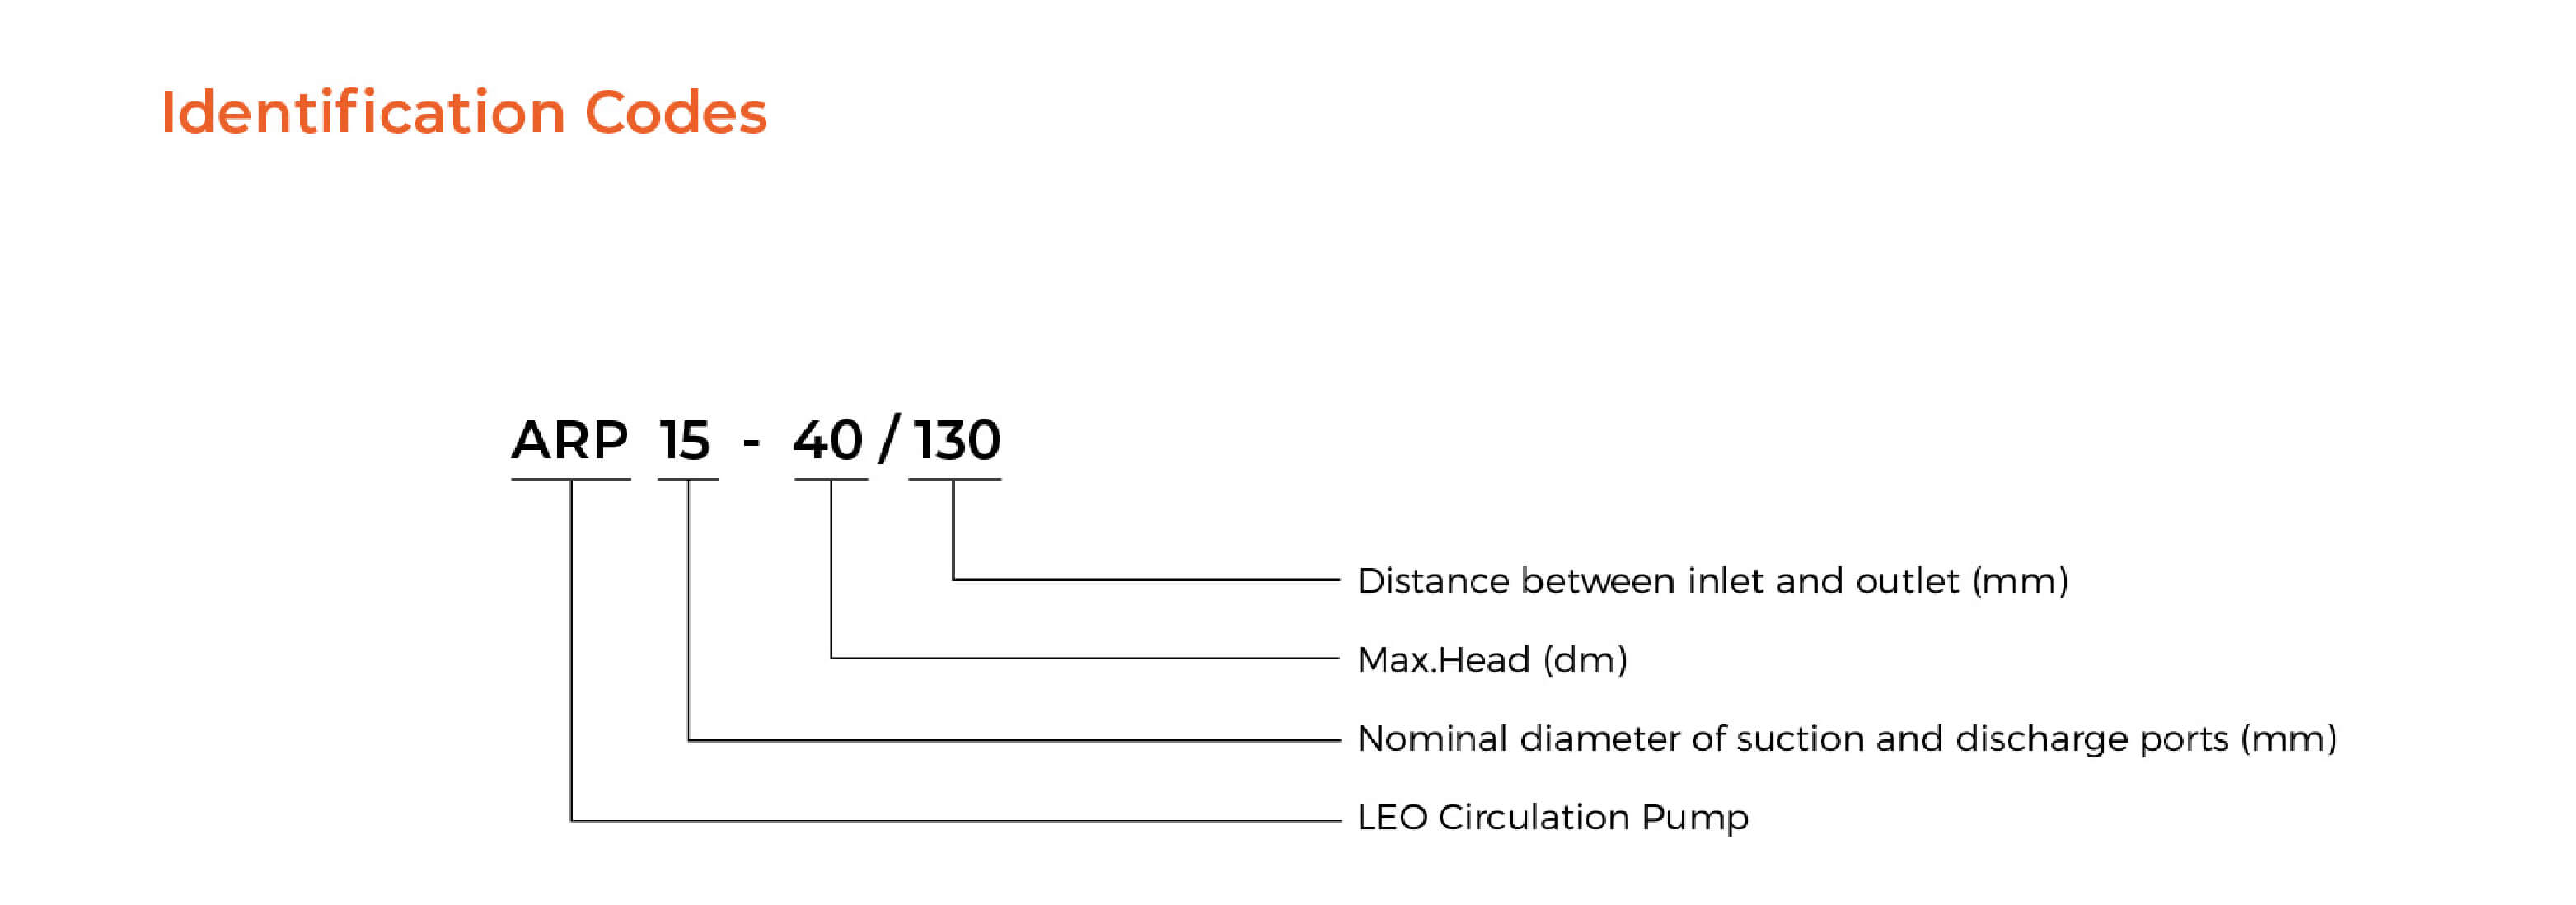 ARP Circulation Pump Identification Codes